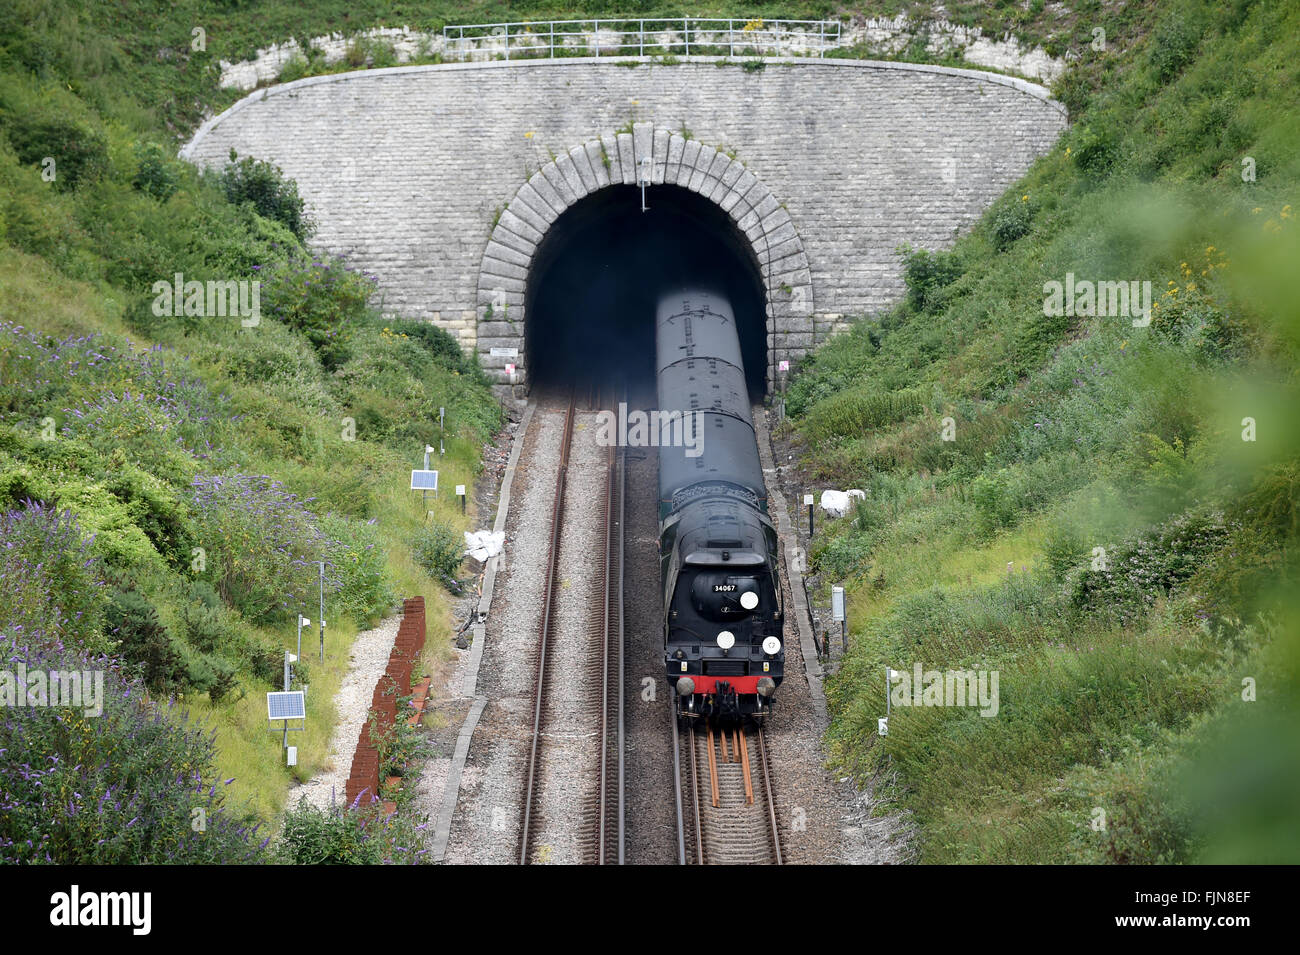 Train tunnel, 'Steam train' UK Stock Photo